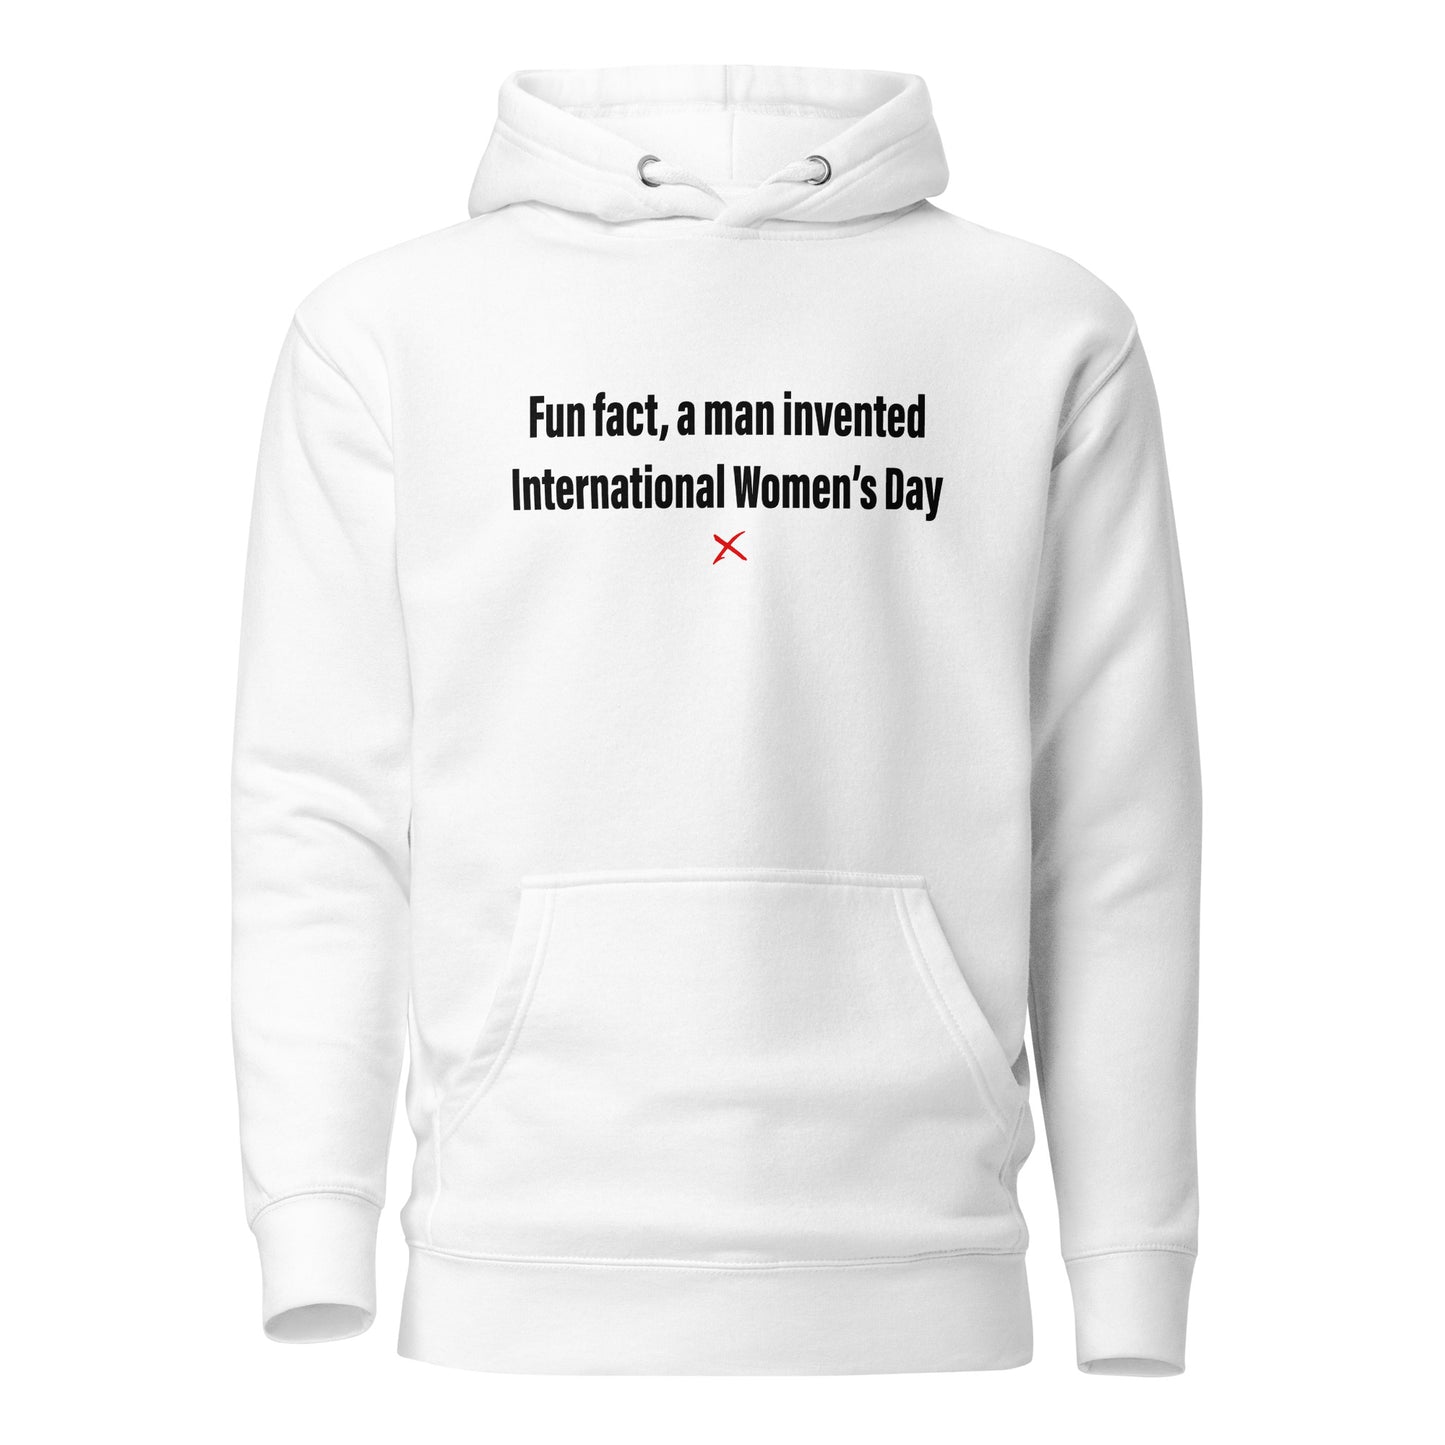 Fun fact, a man invented International Women's Day - Hoodie